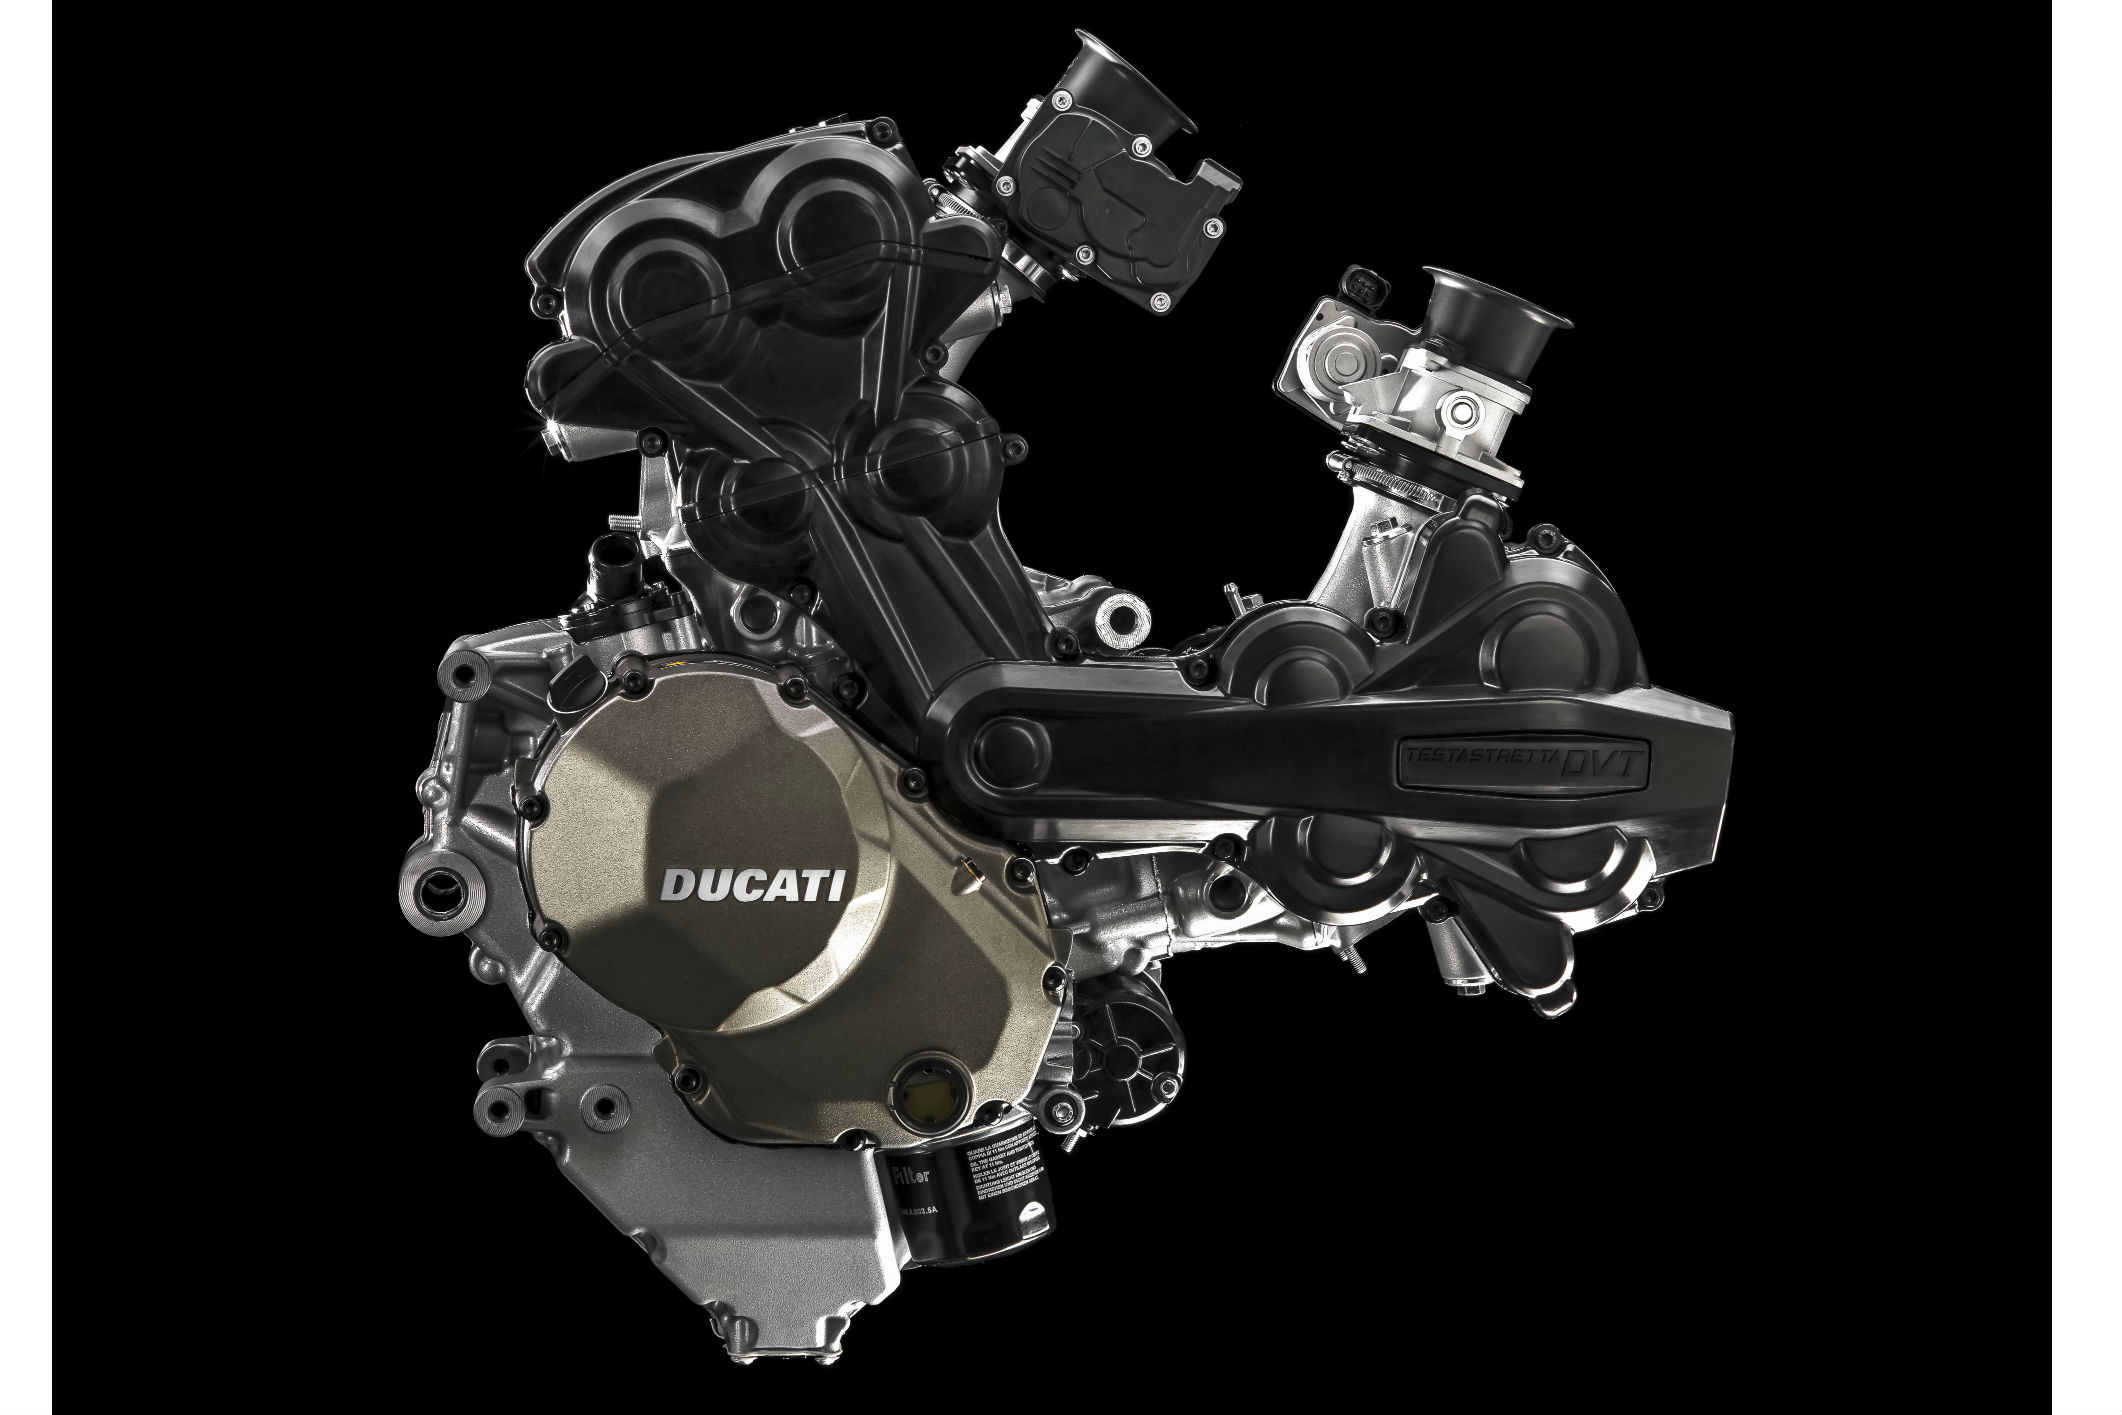 New Ducati Multistrada details revealed